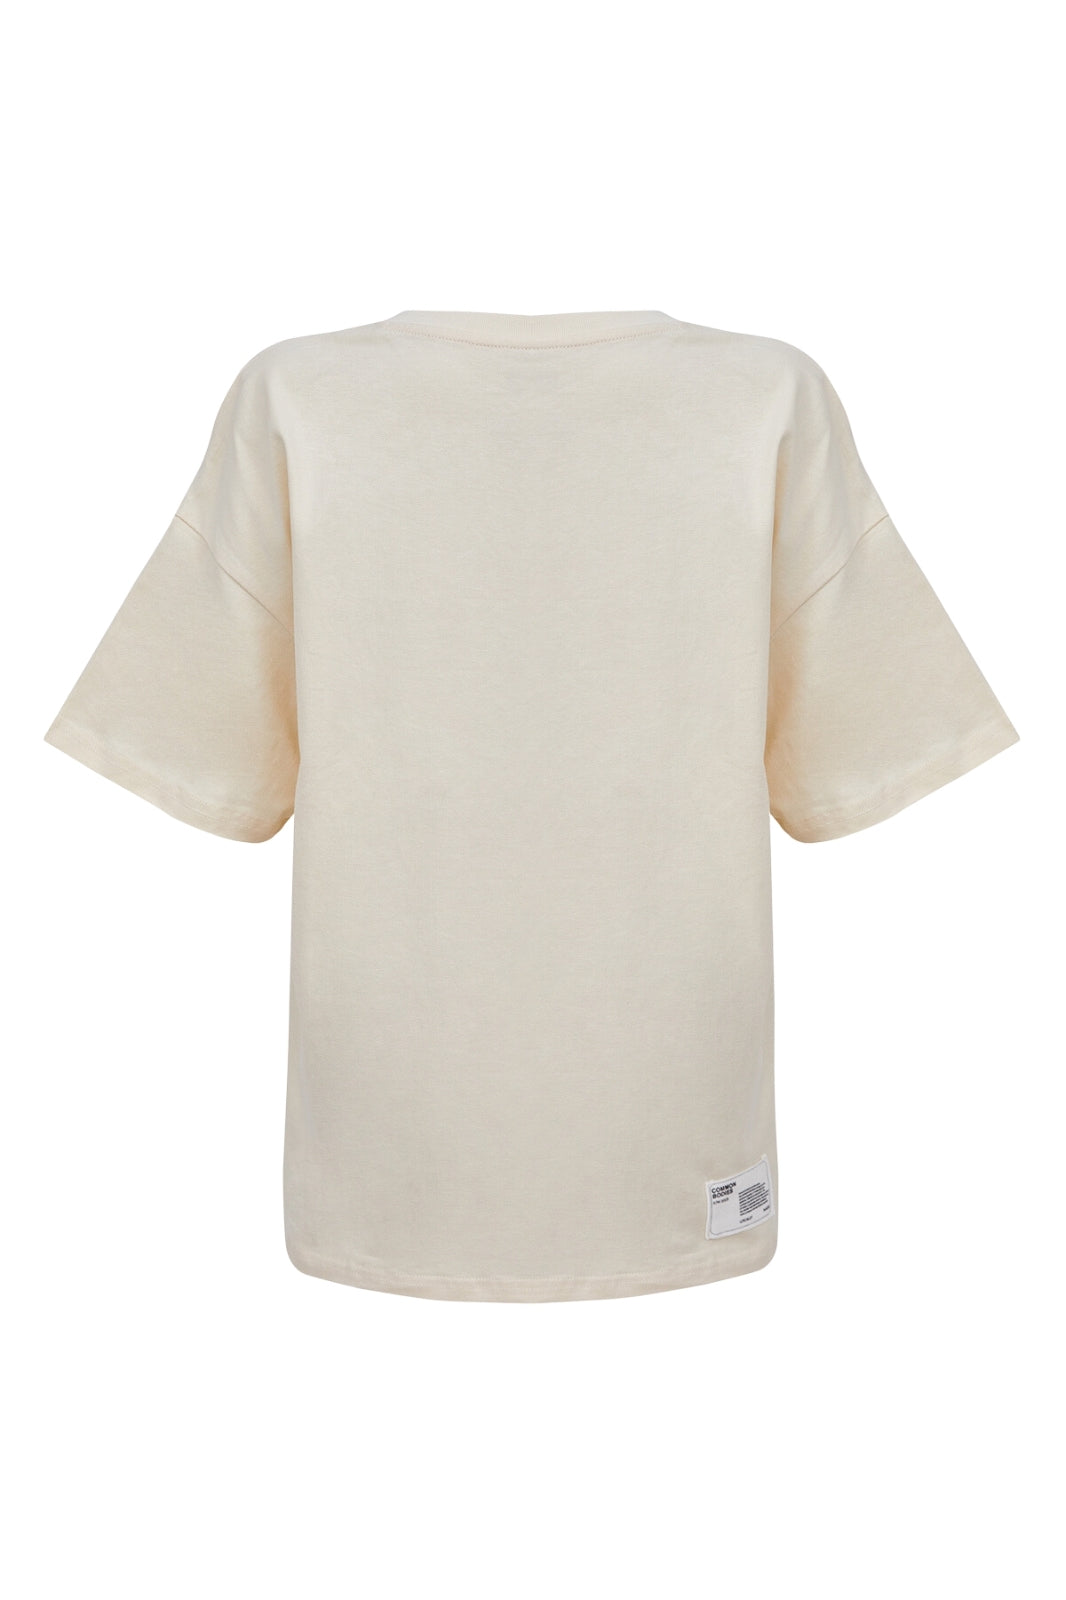 Common Bodies T-shirt in Latte (Unisex) (6 L LEFT)